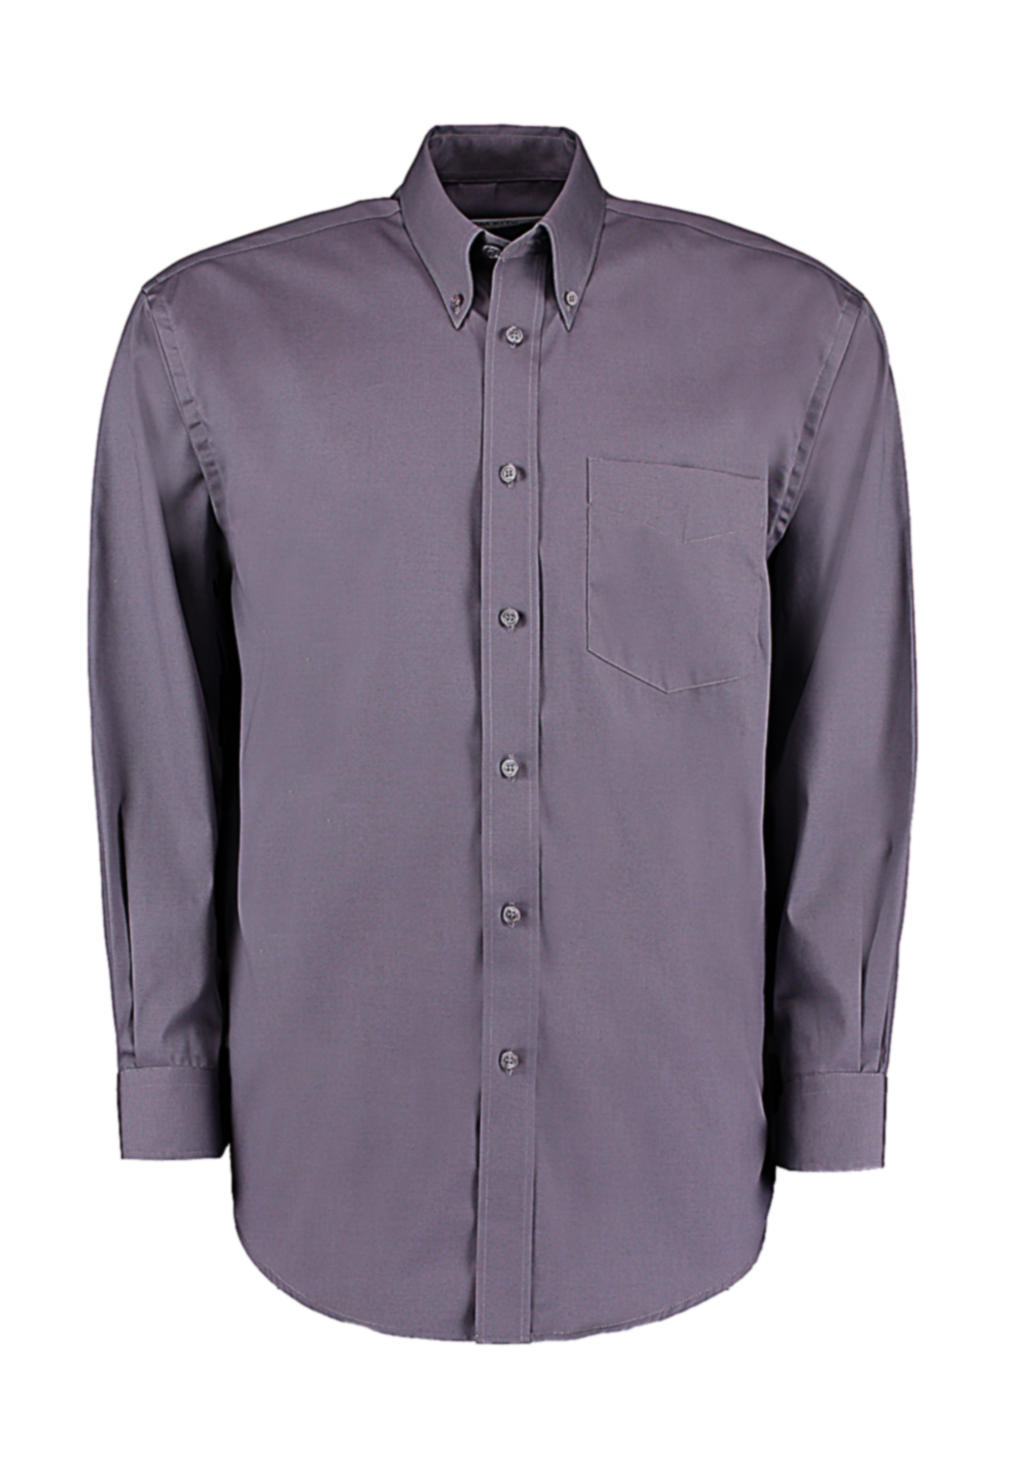 778.11 / Classic Fit Premium Oxford Shirt / Charcoal